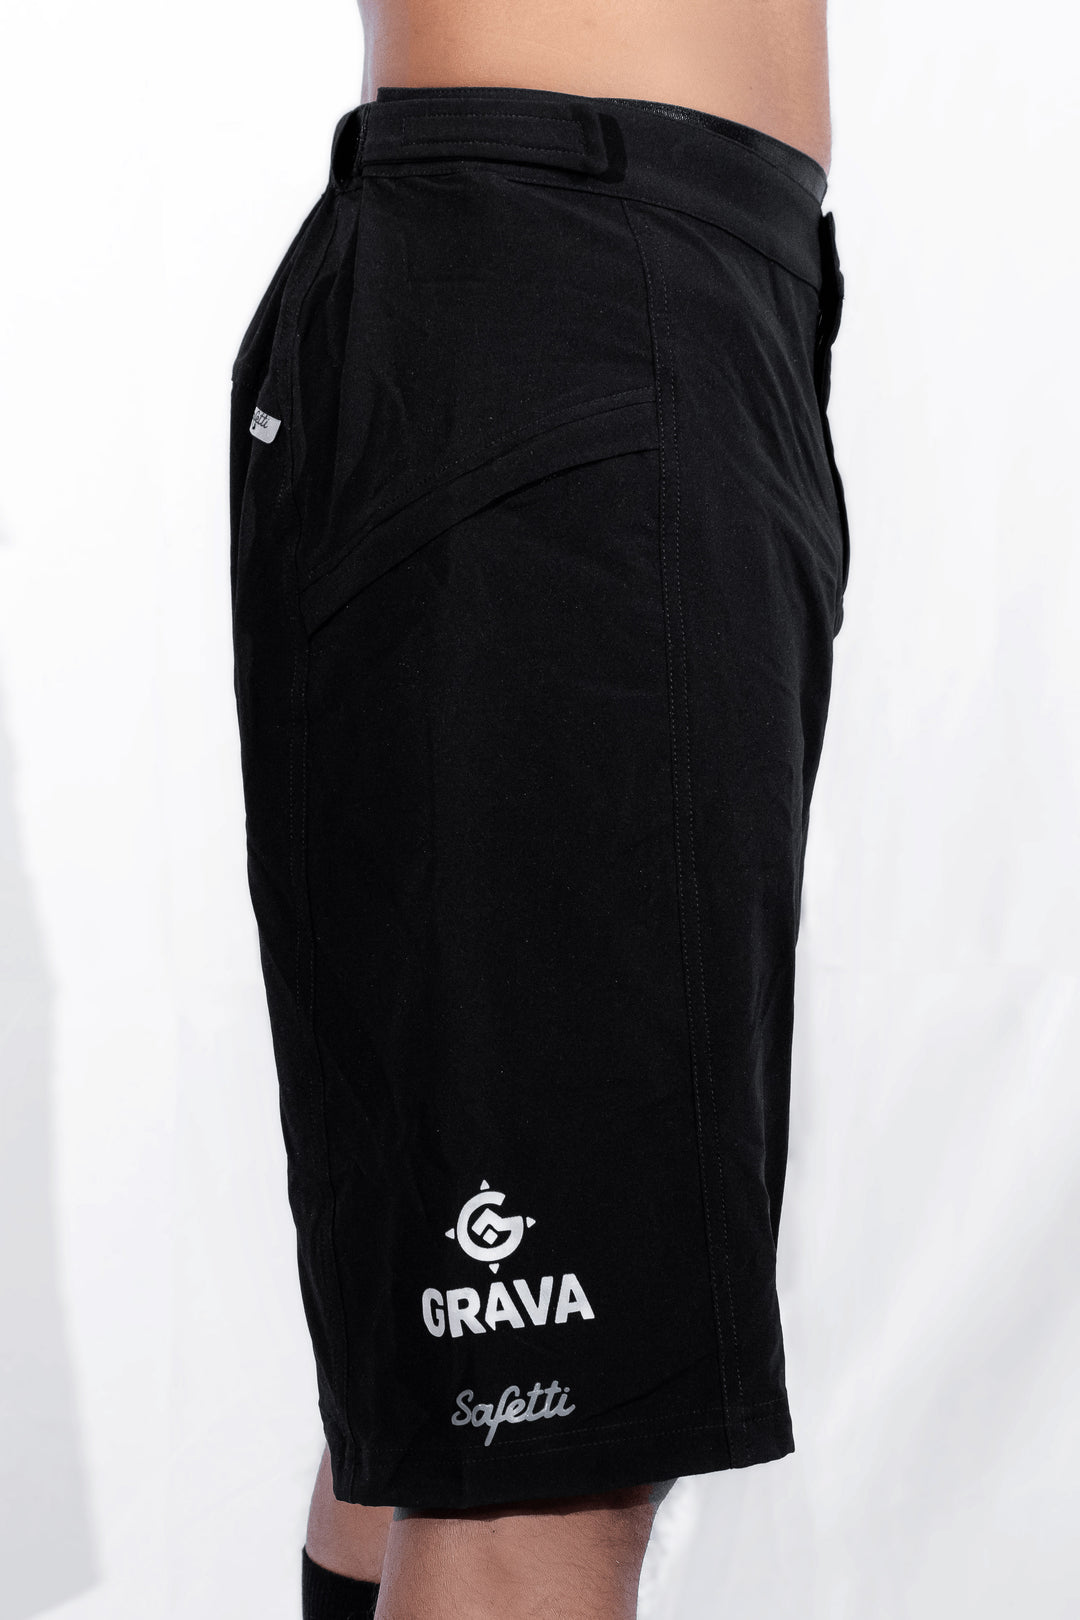 Men's Adventure MTB Shorts - Grava Adventure Corporation